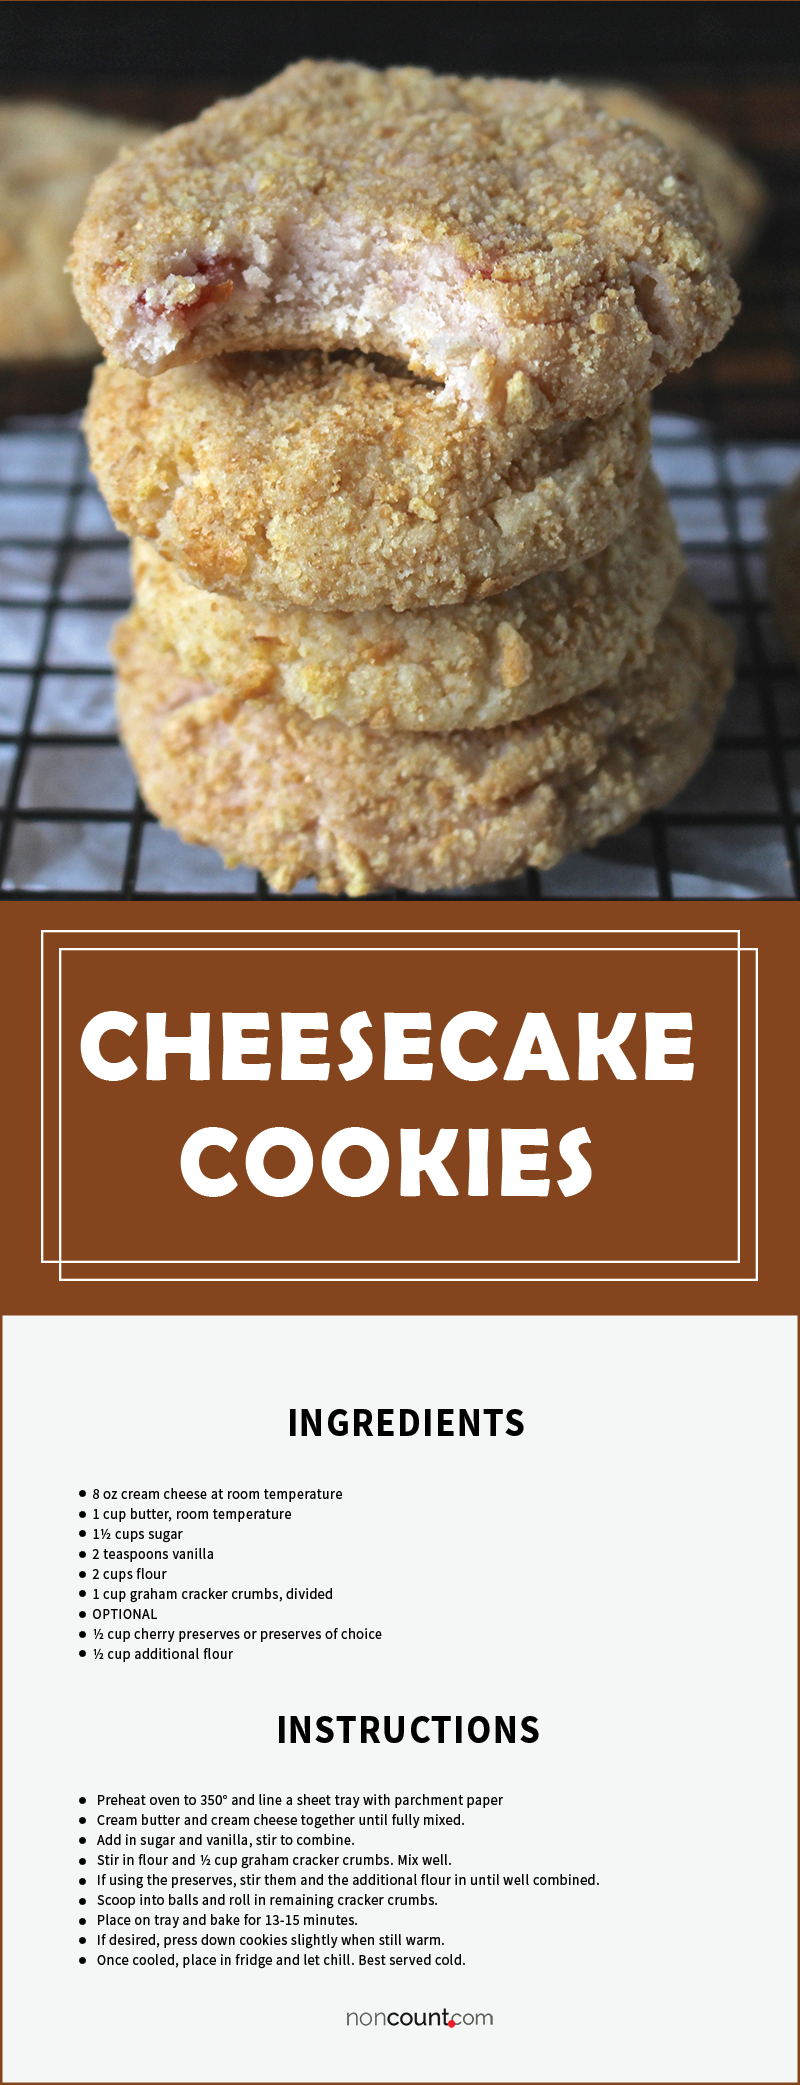 Cheesecake Cookies Recipe Image